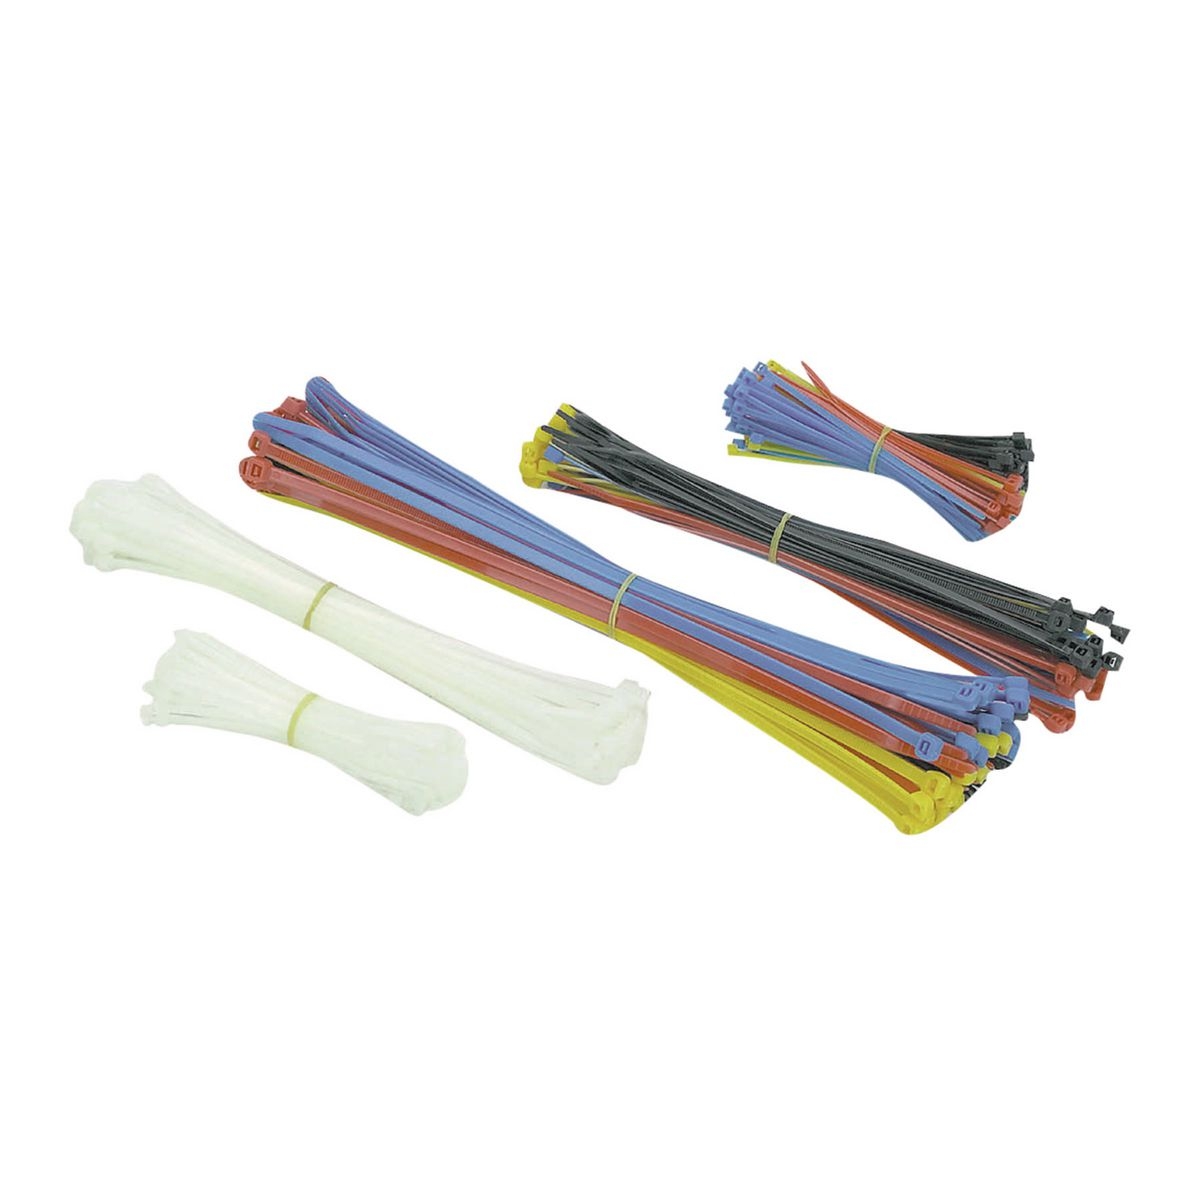 STOREHOUSE Cable Tie Assortment 350 Pk. - Item 60264 / 45057 / 69407